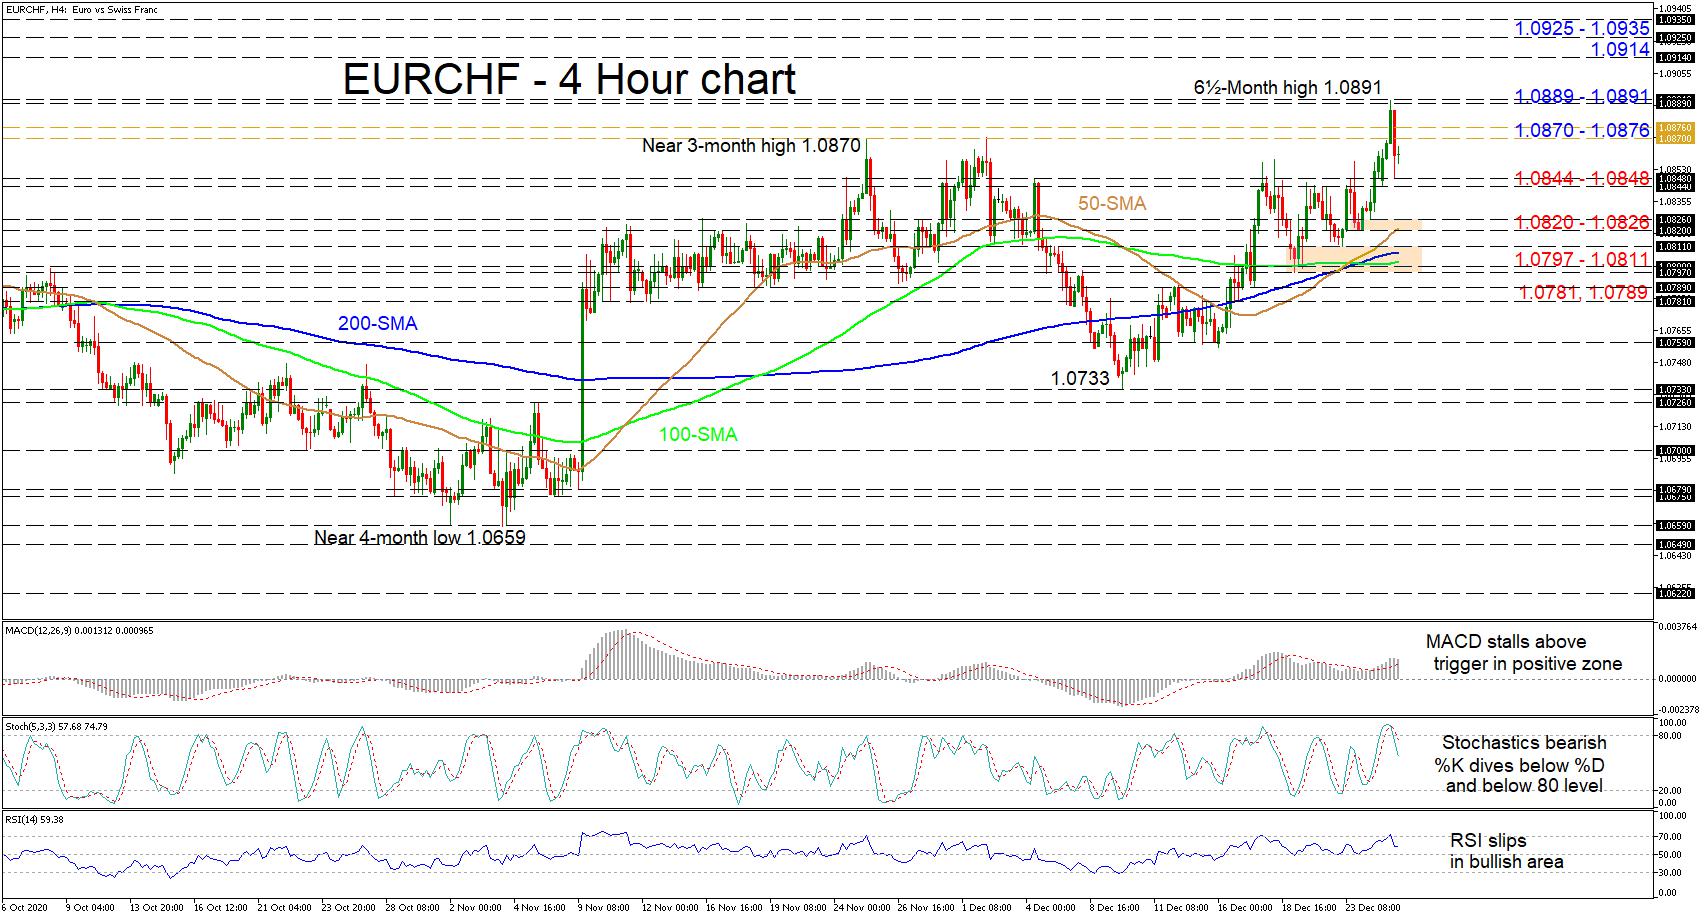 Technical analysis: EUR/CHF remains optimistic although advances hit a snag